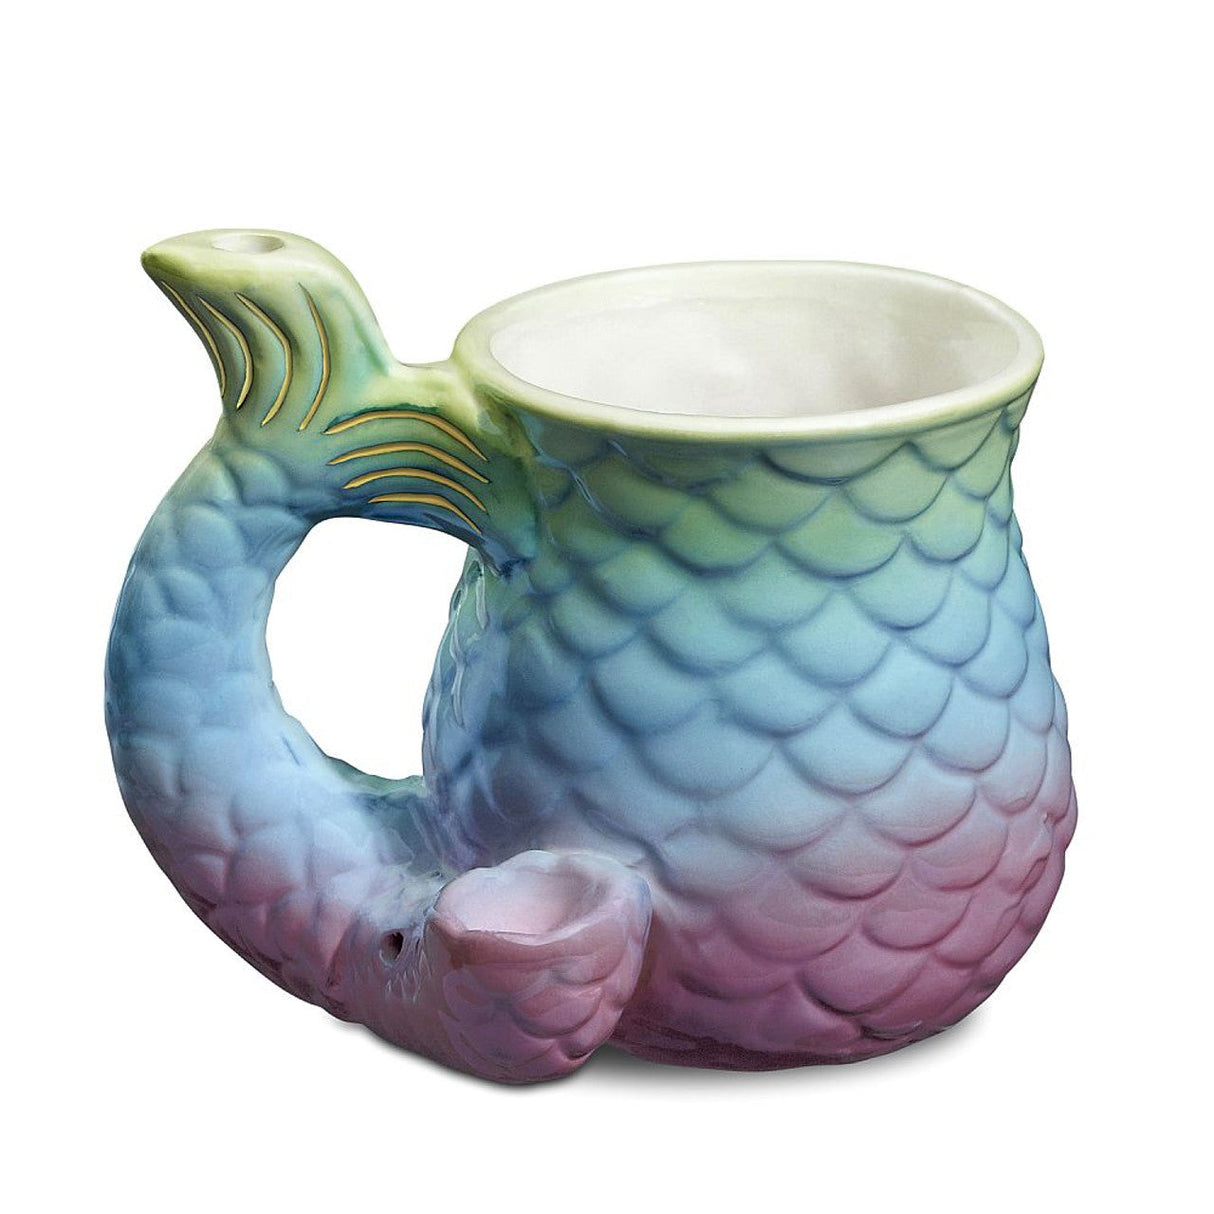 Fashion Craft Roast & Toast Ceramic Mermaid Mug with Pipe, Front View on White Background